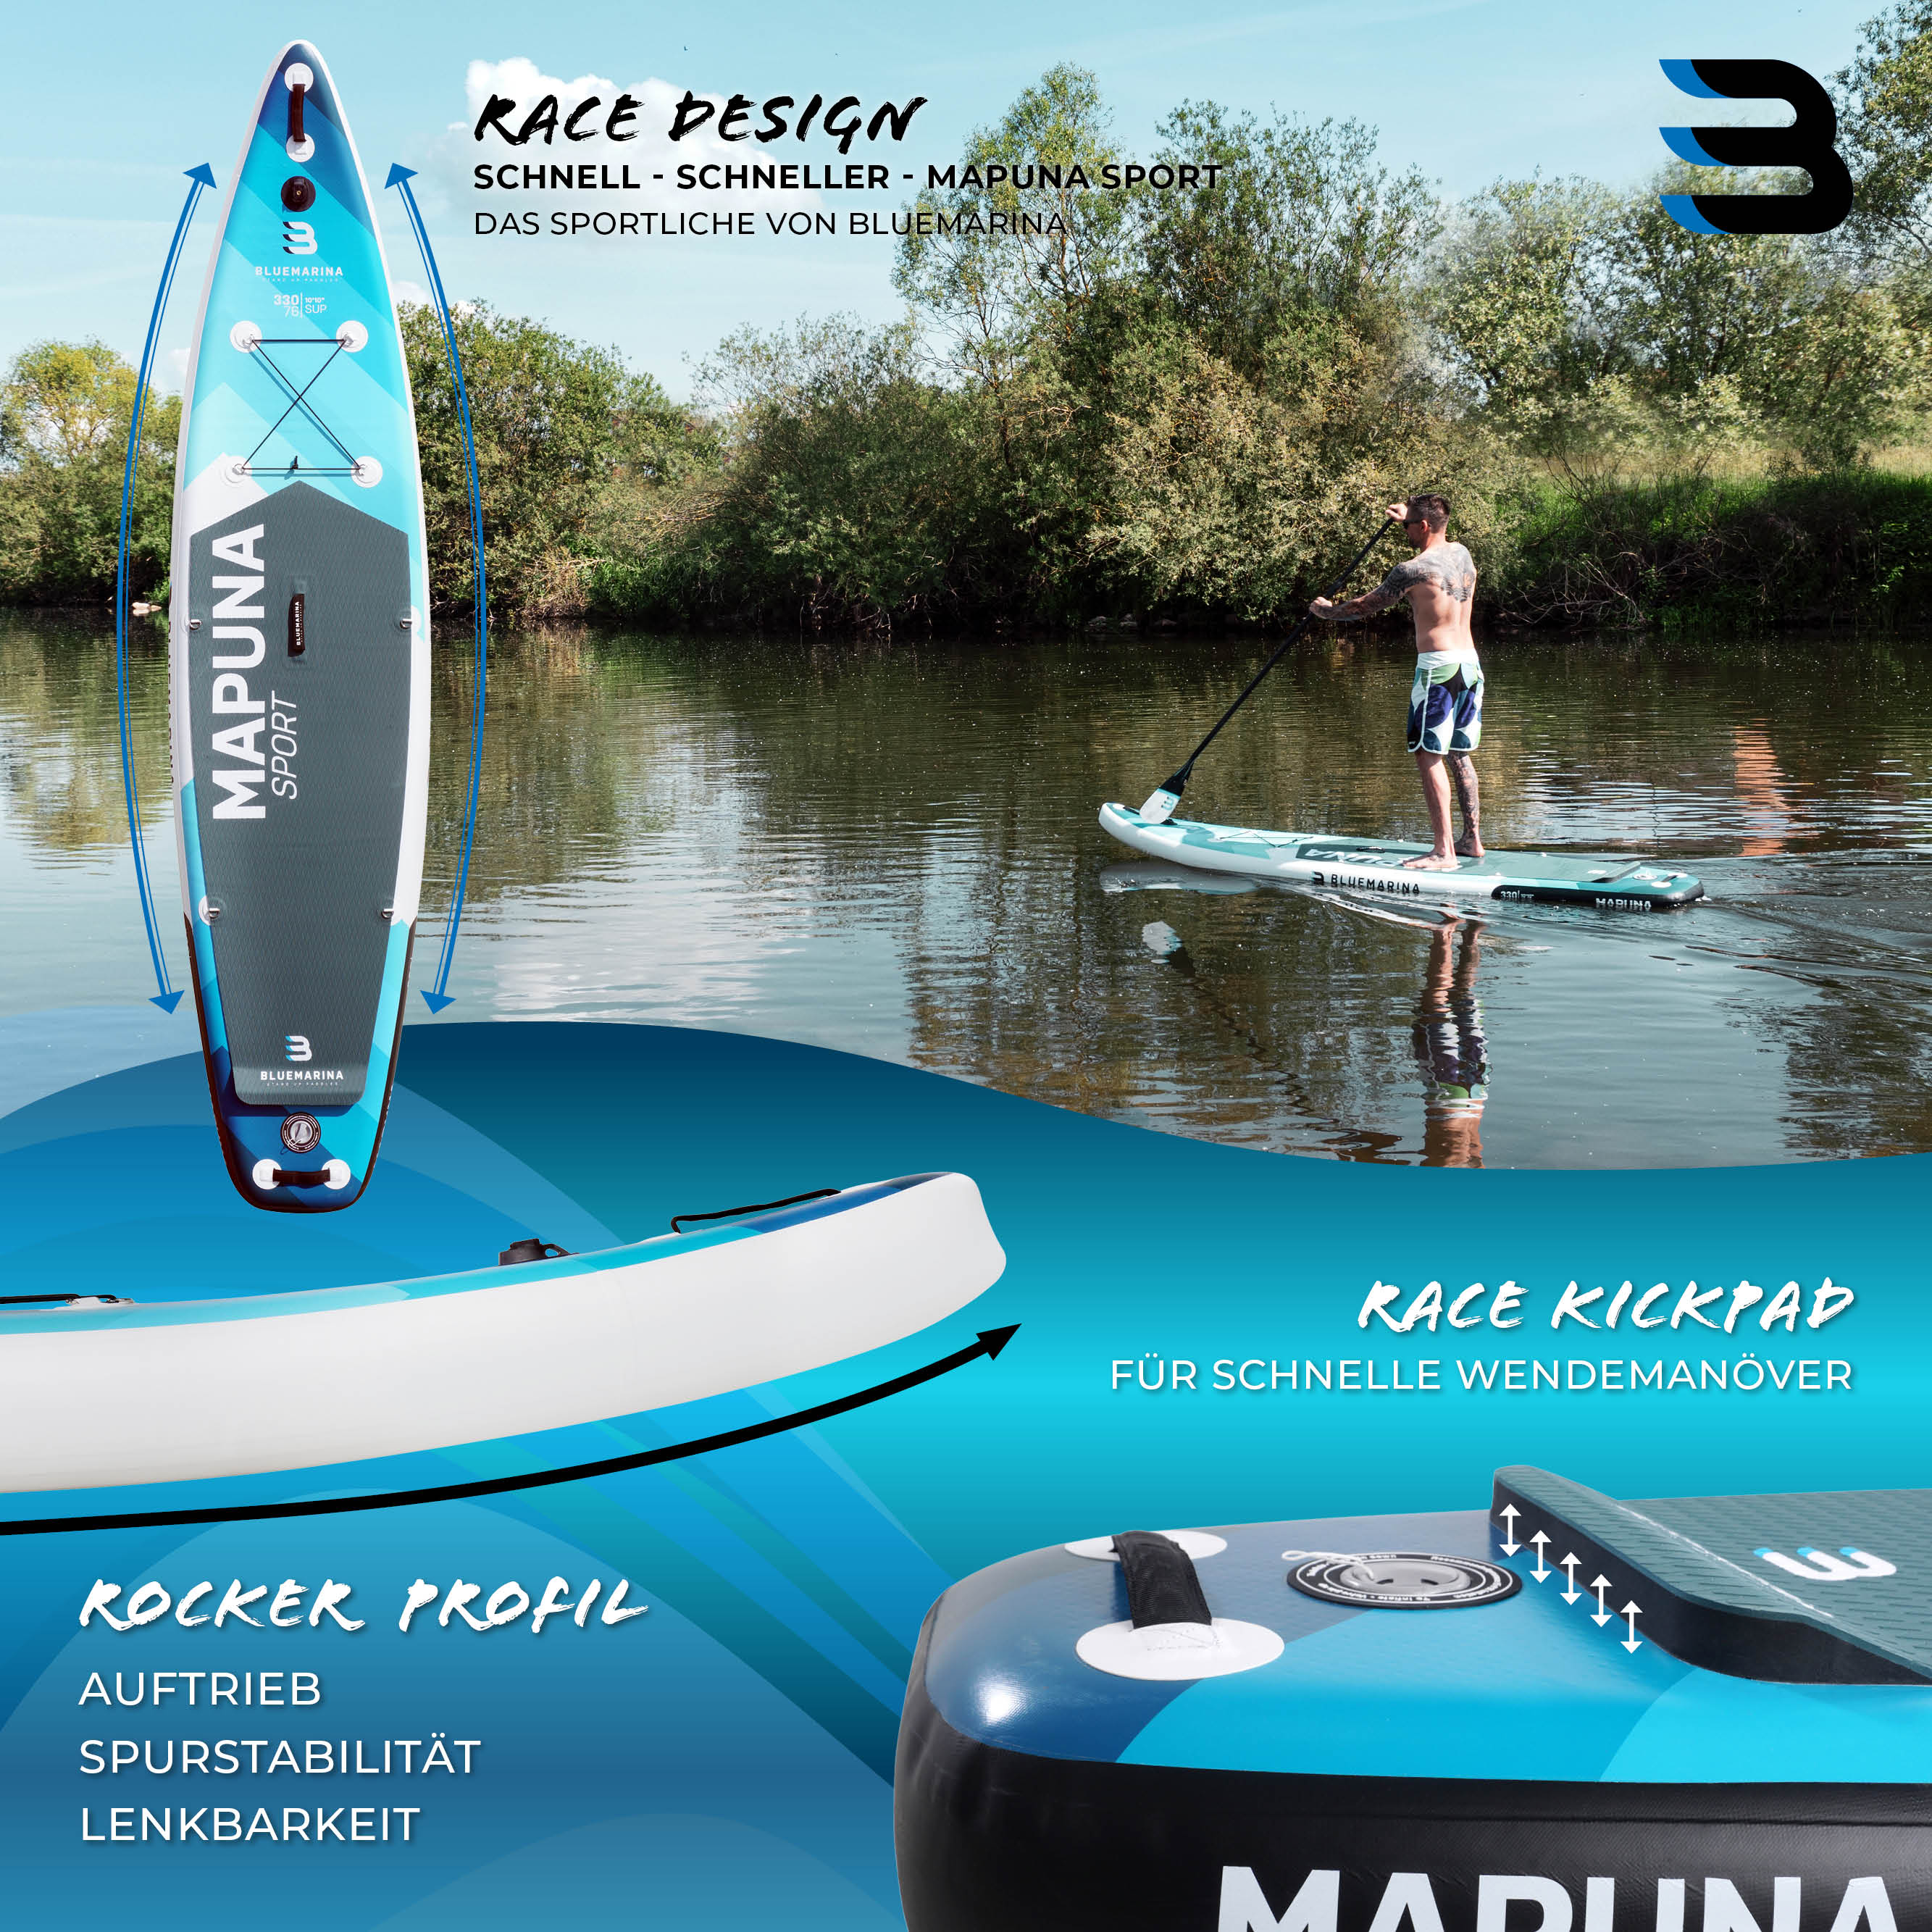 BLUEMARINA SUP Paddle, Board Up 2022 Mapuna blau weiß Stand schwarz